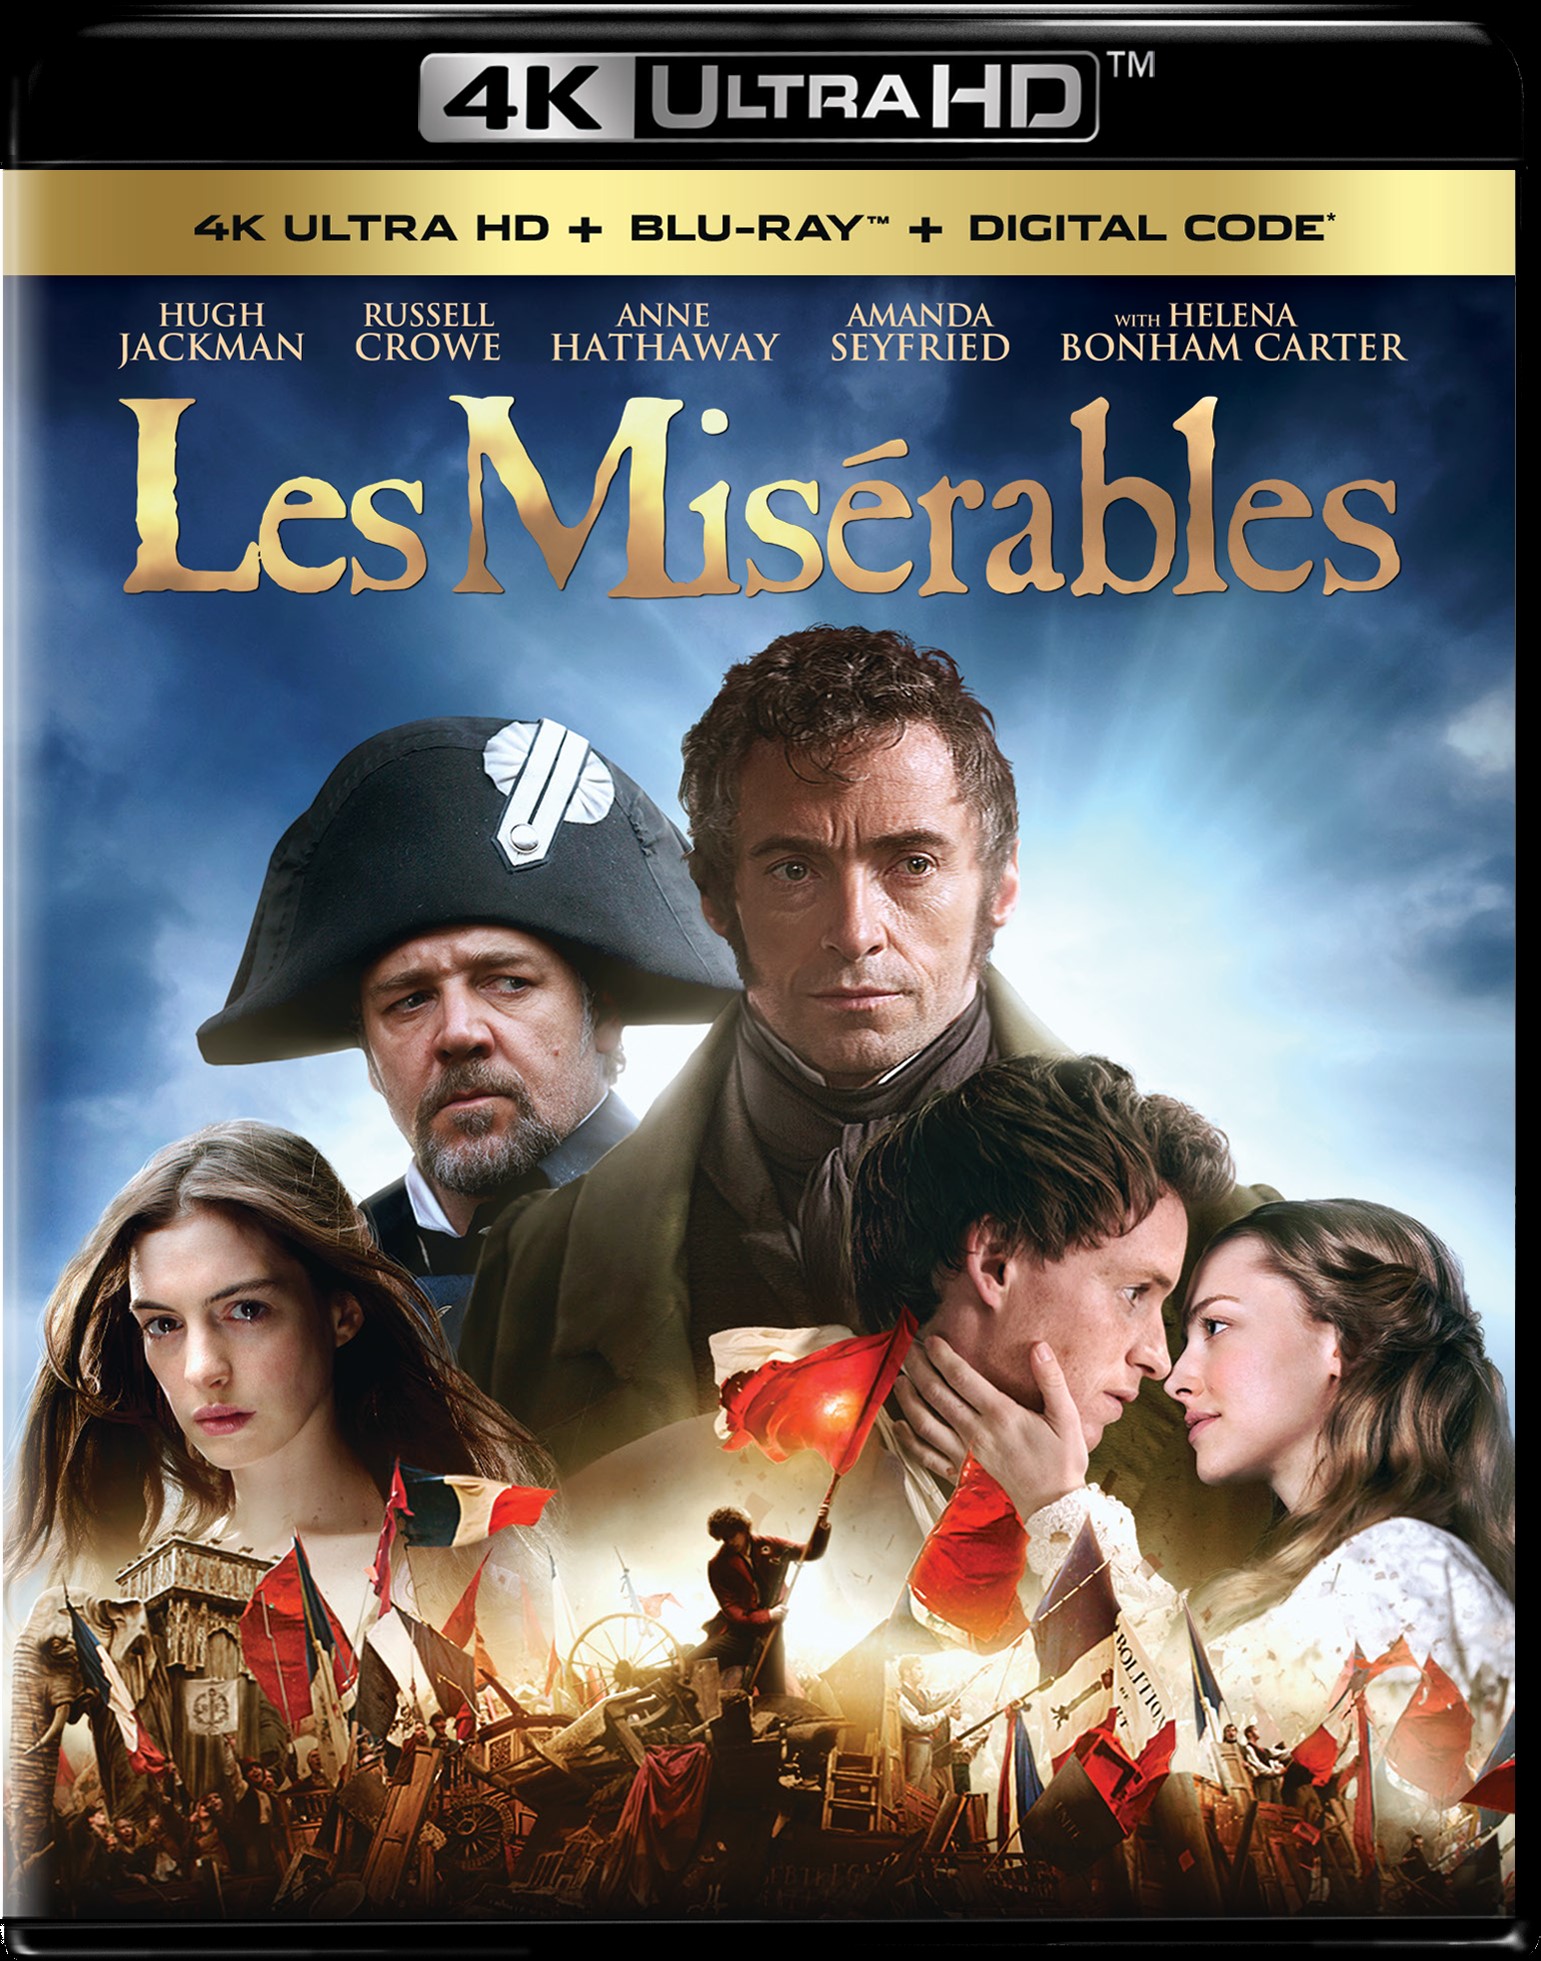 Les Misérables (4K Ultra HD + Blu-ray) - UHD [ 2012 ]  - Musical Movies On 4K Ultra HD Blu-ray - Movies On GRUV